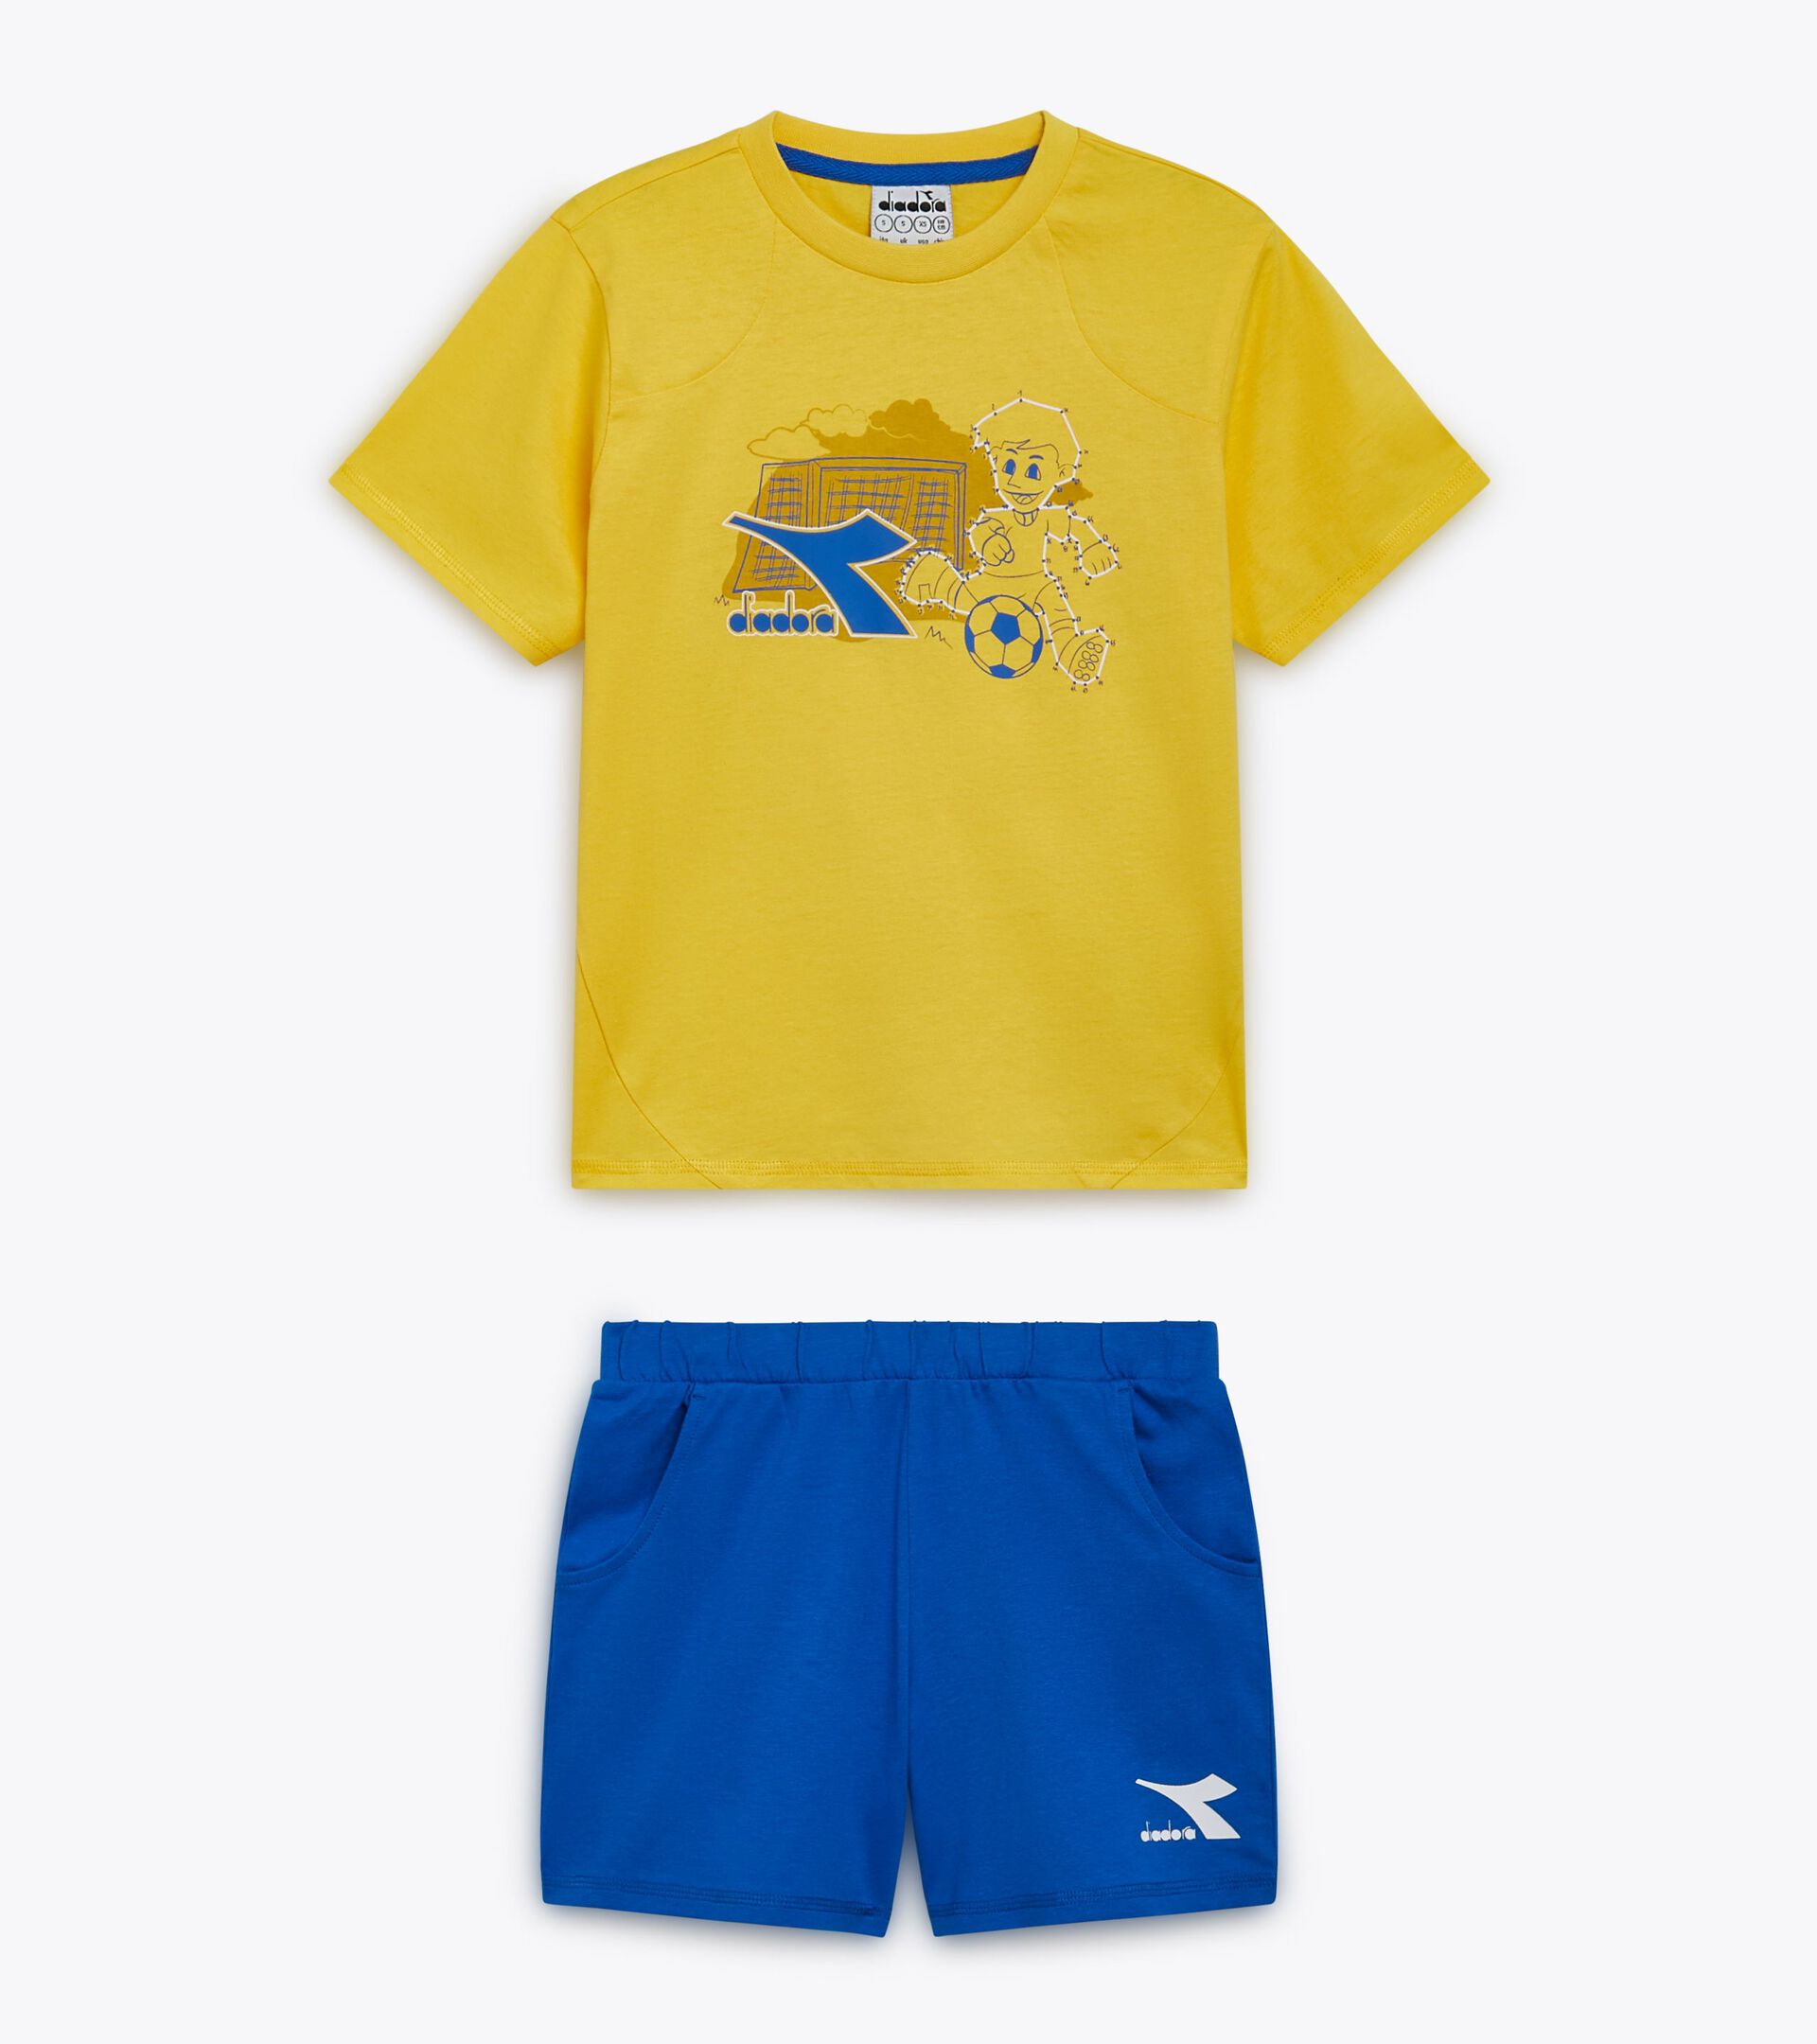 Sports set - T-shirt and shorts - Boy
 JB. SET SS RIDDLE ASPEN GOLD - Diadora